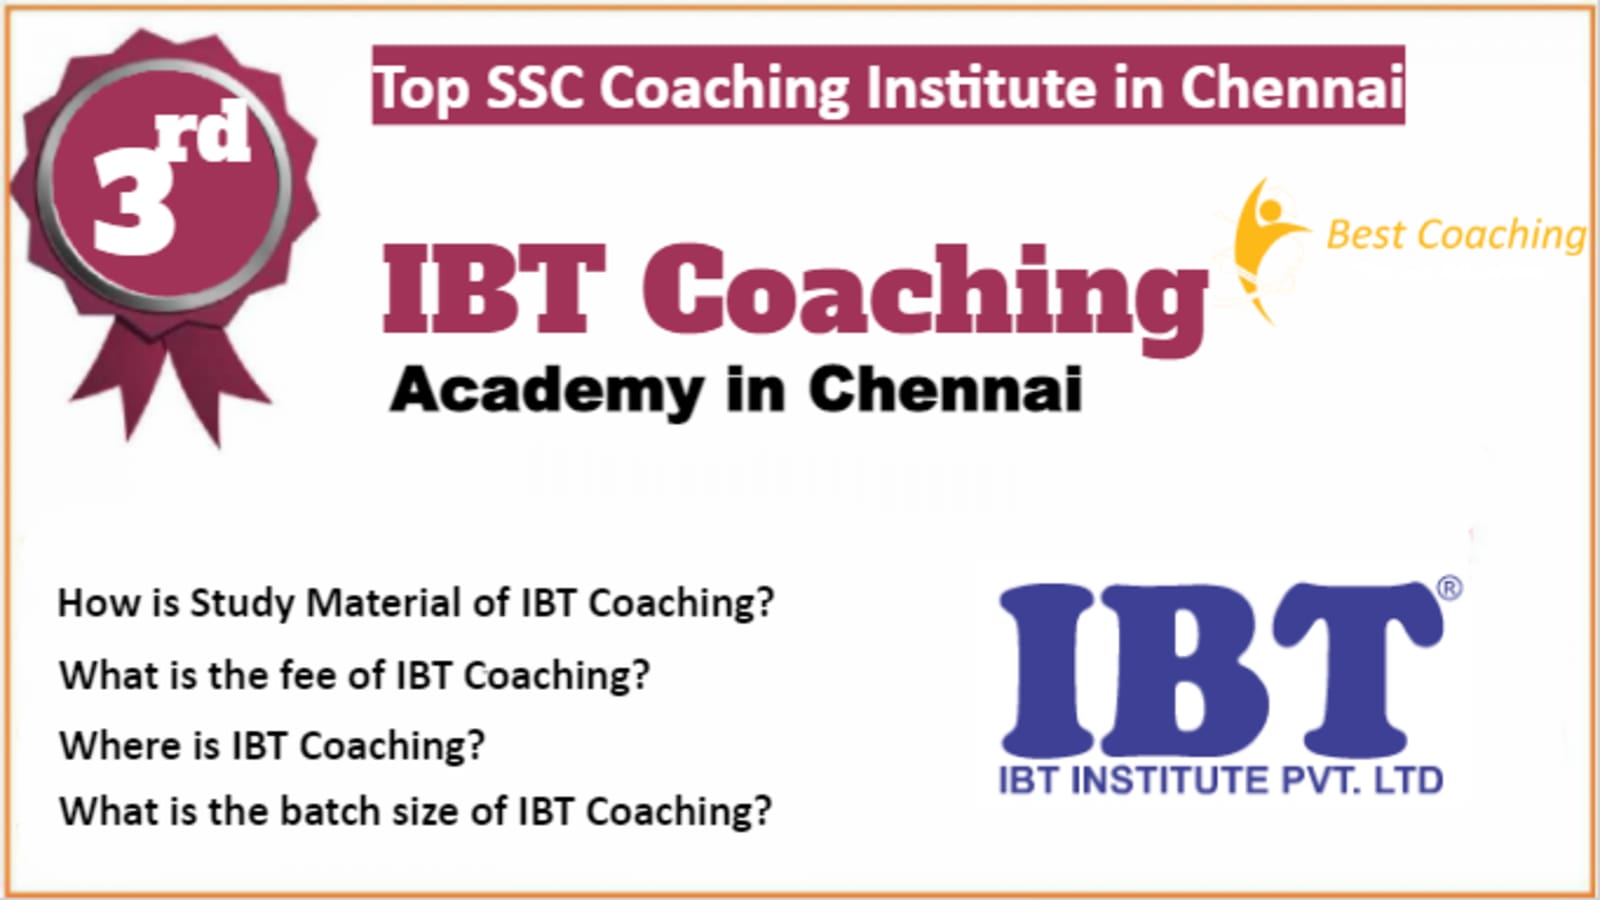 Rank 3 Best SSC Coaching in Chennai